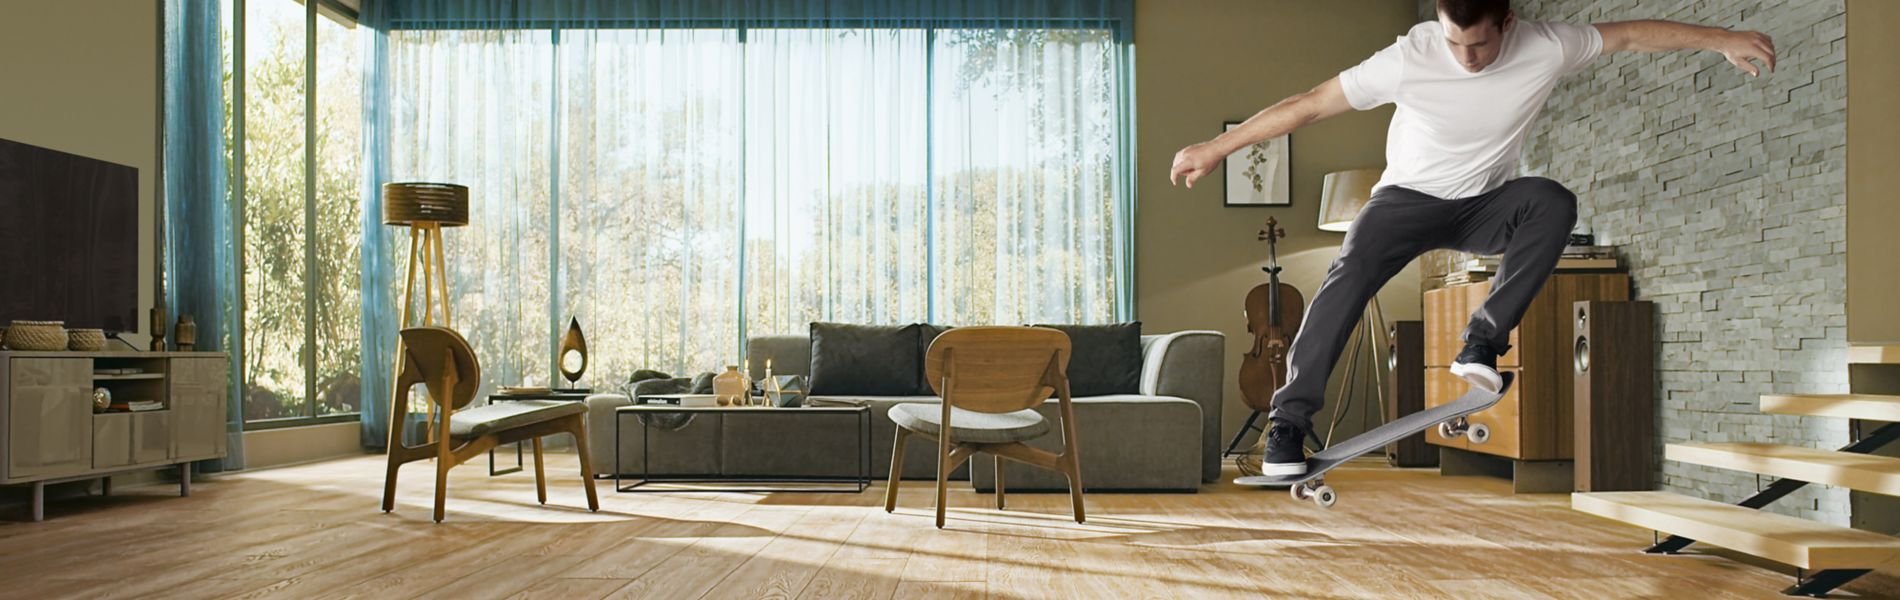 Man on skateboard in living room with hardwood floor.